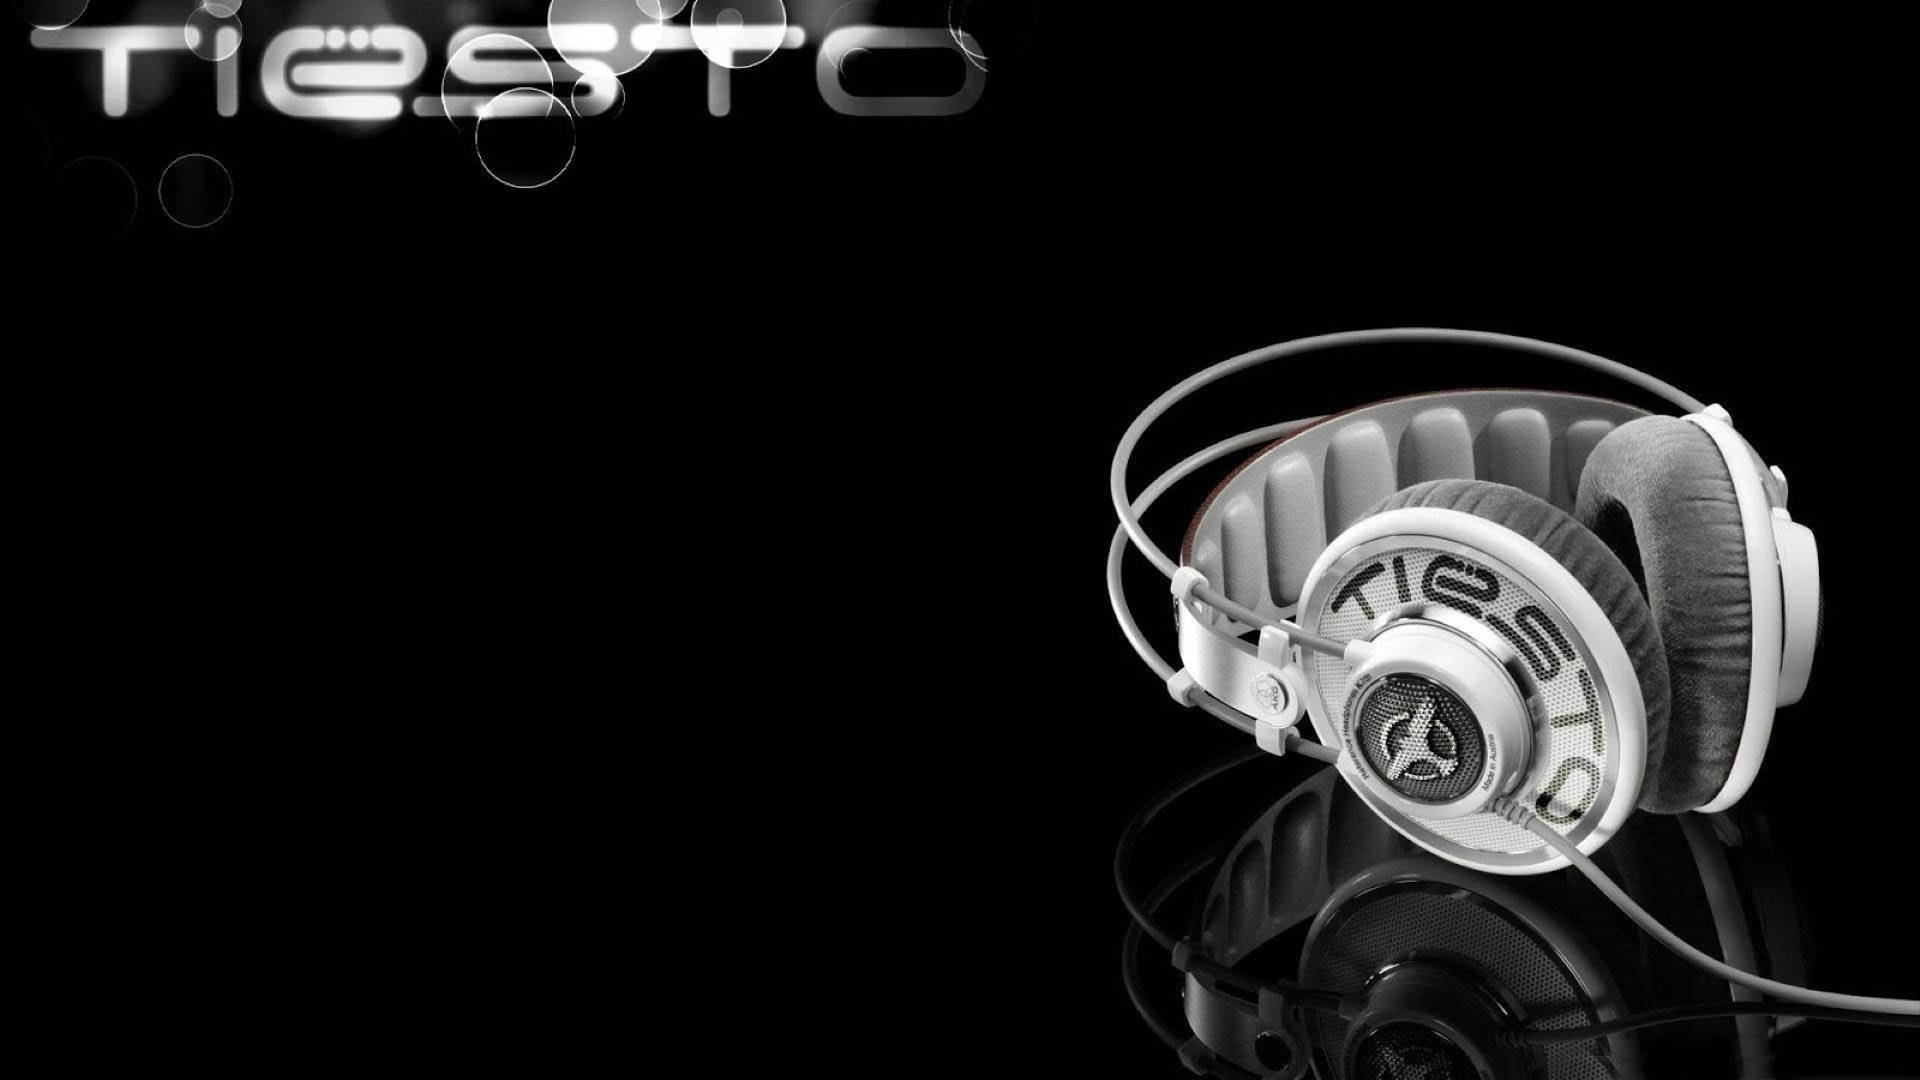 Cool Tiesto Graphic Headphones